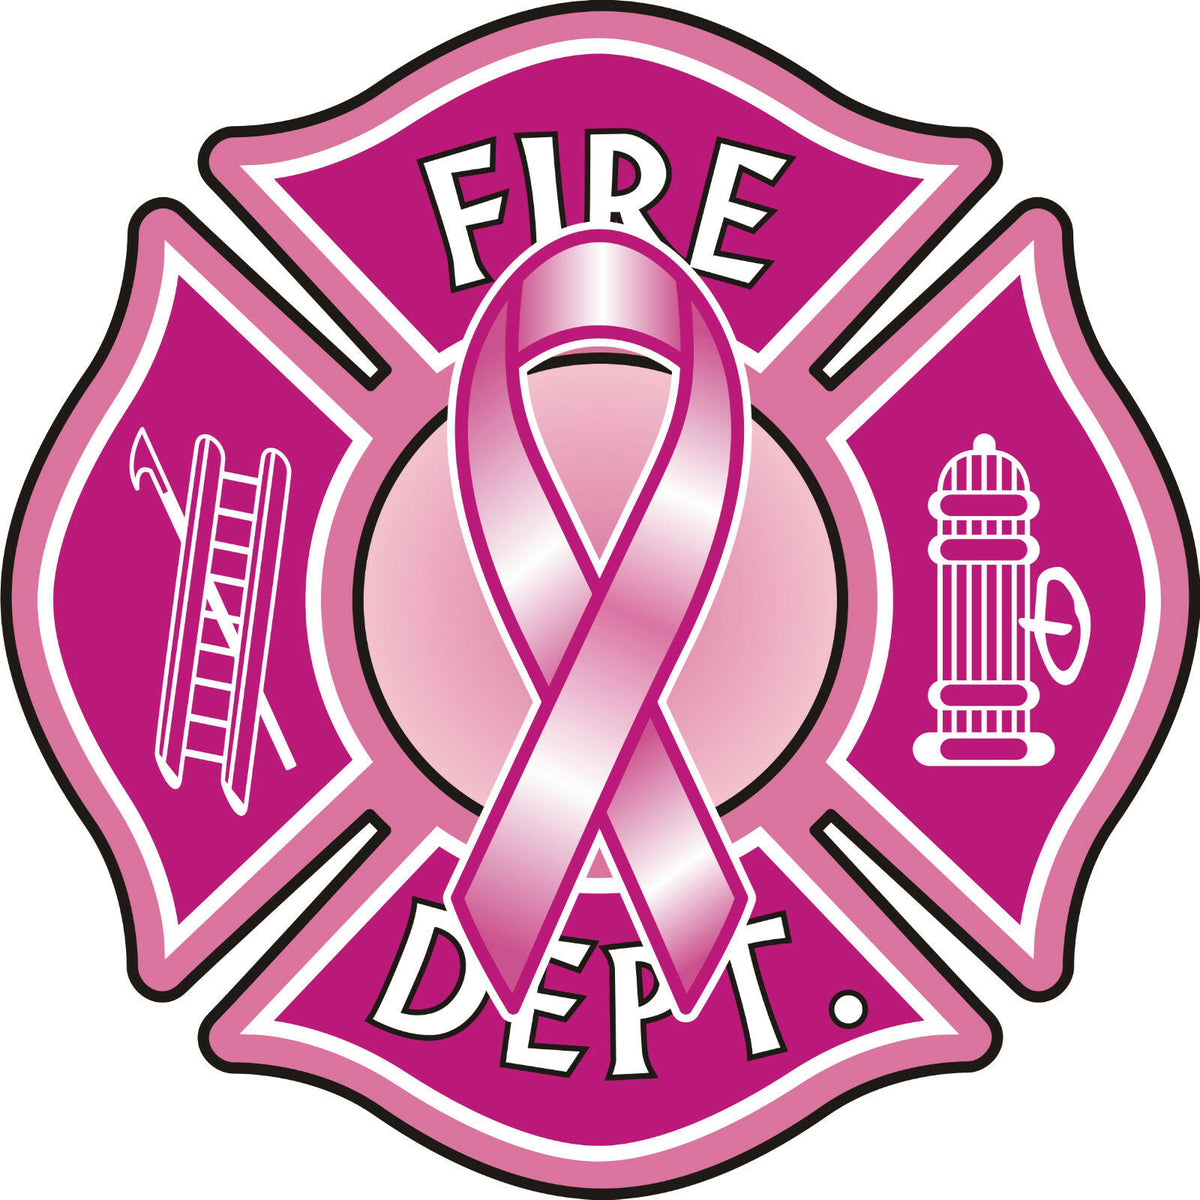 Firefighter Decal 4"x4" Fire Dept. Maltese Cross Breast Cancer Awareness Decal - Powercall Sirens LLC